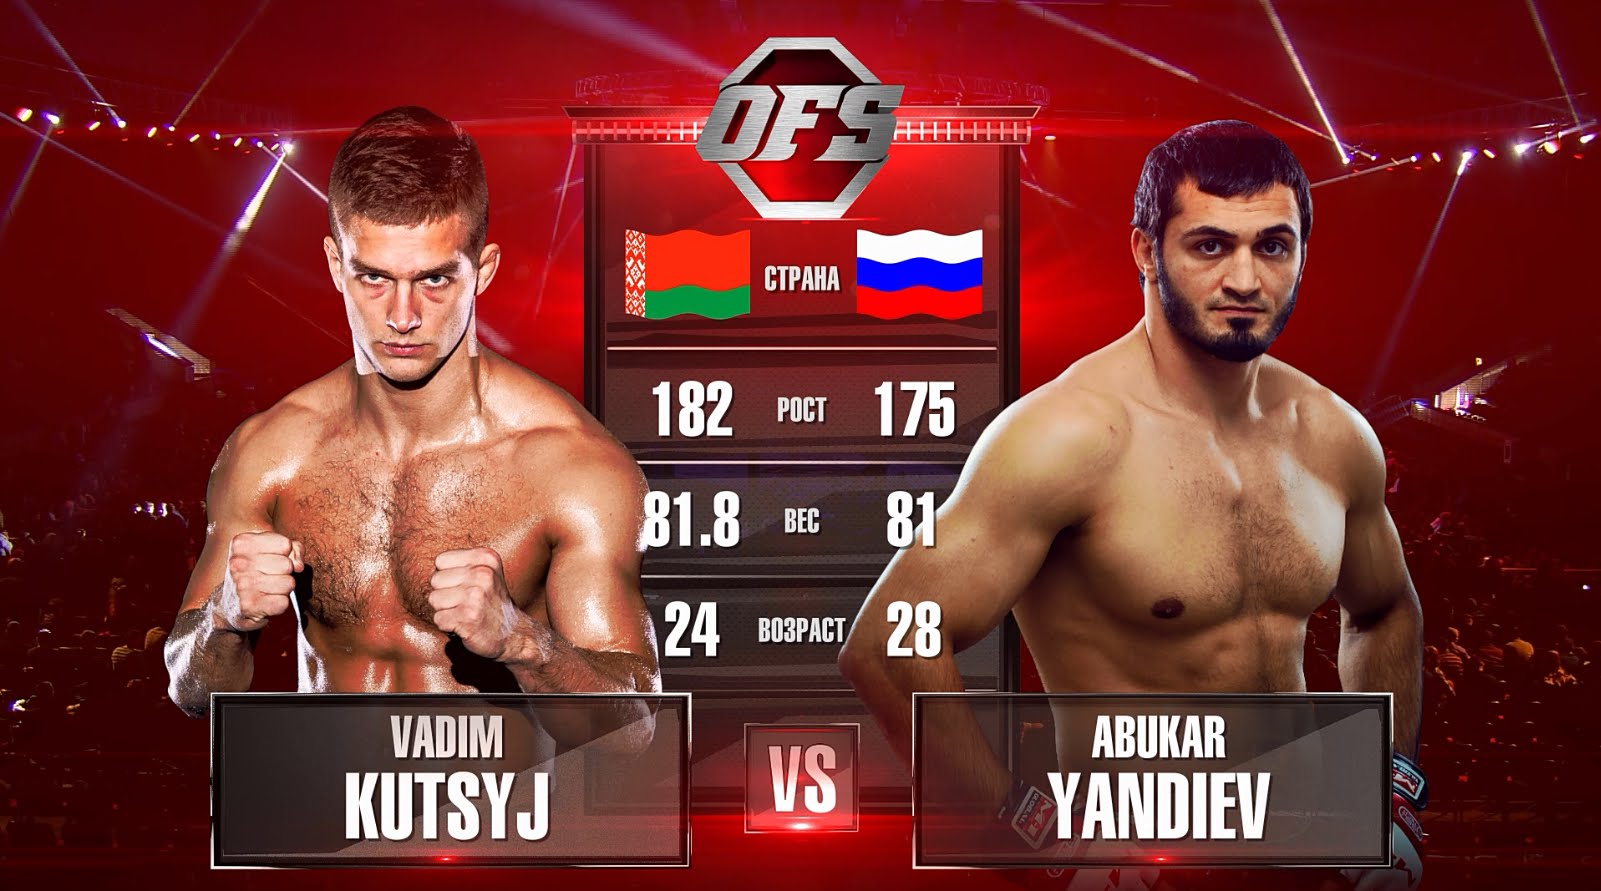 OFS-7 Vadim Kutsyj vs Abukar Yandiev Full Fight MMA Video1601 x 891